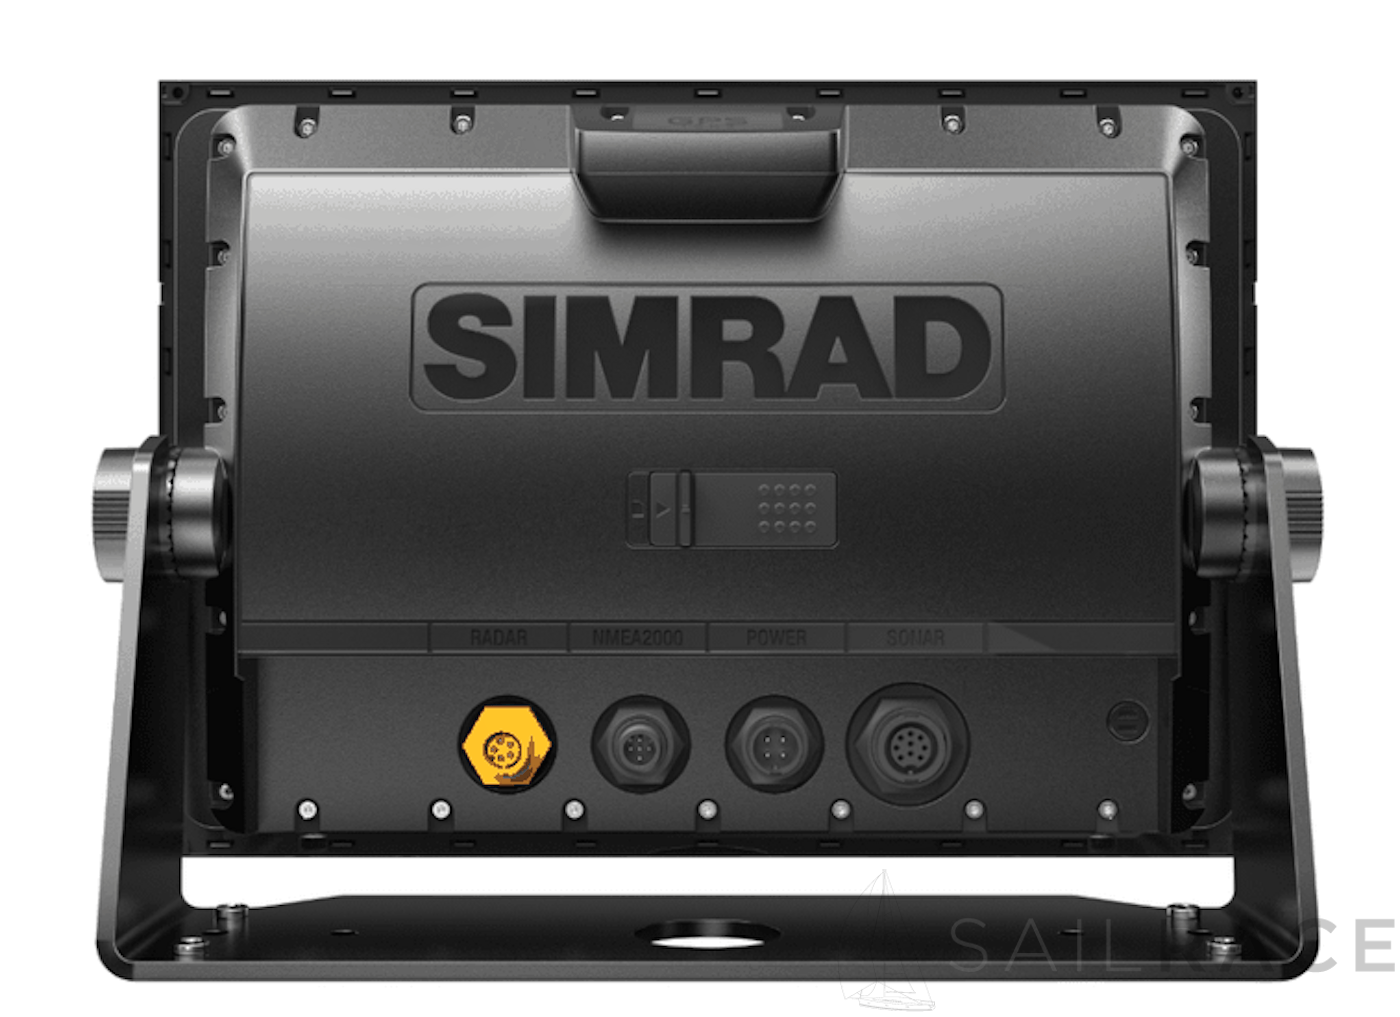 Simrad 12-inch chartplotter and radar display with Broadband 3G™ radar and TotalScan™ transducer - image 2